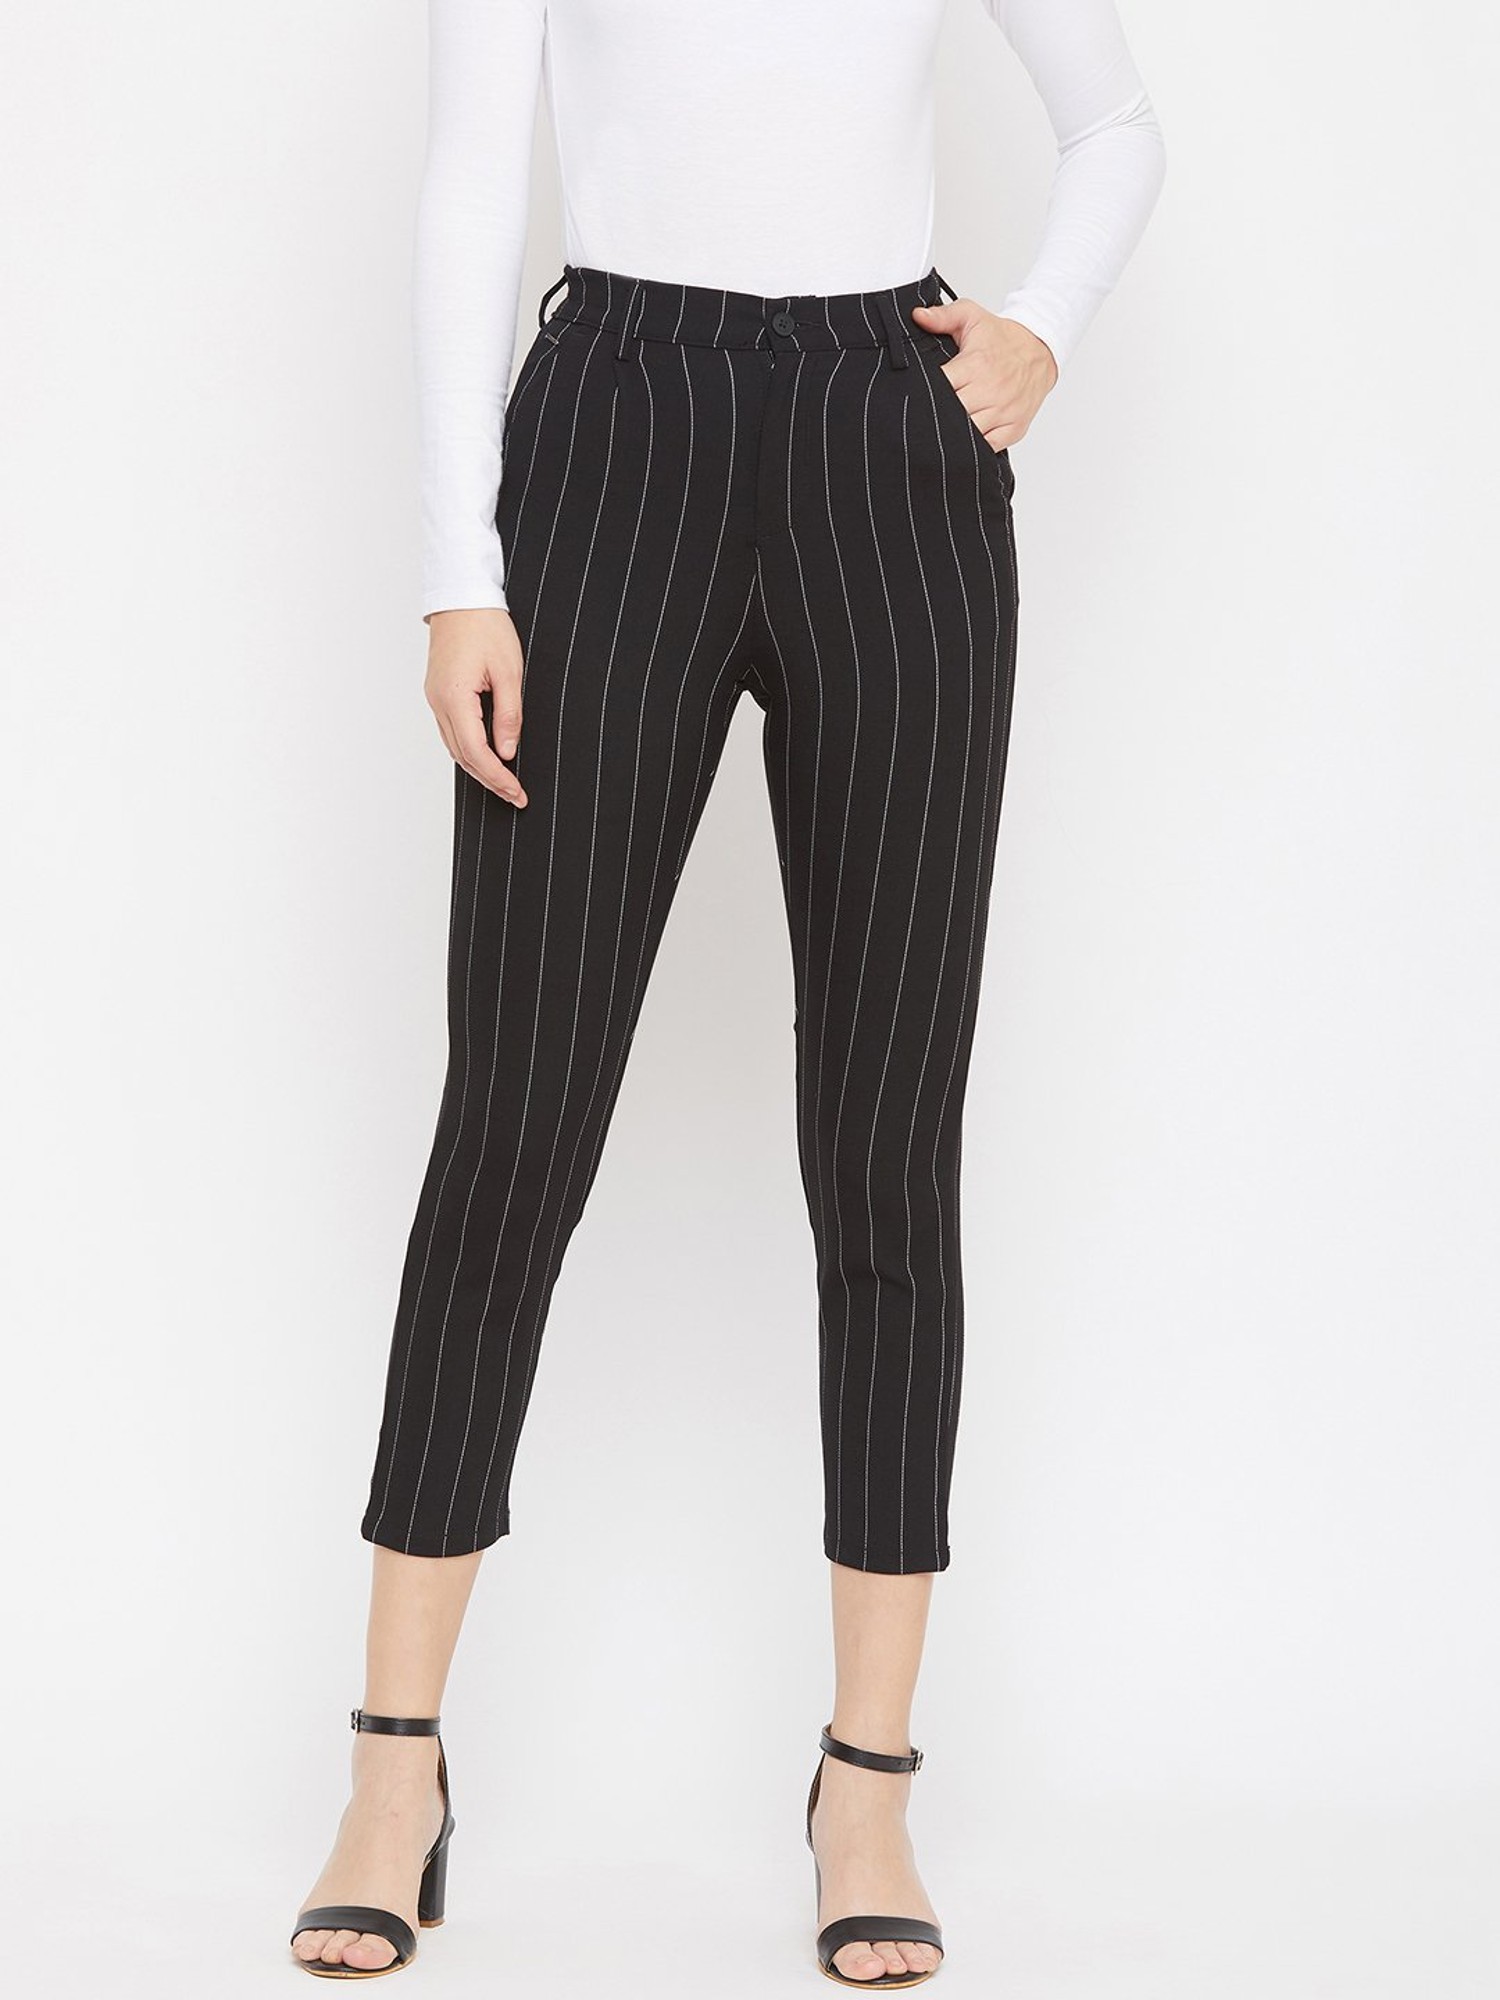 Buy AND Black  White Striped Pants for Women Online  Tata CLiQ